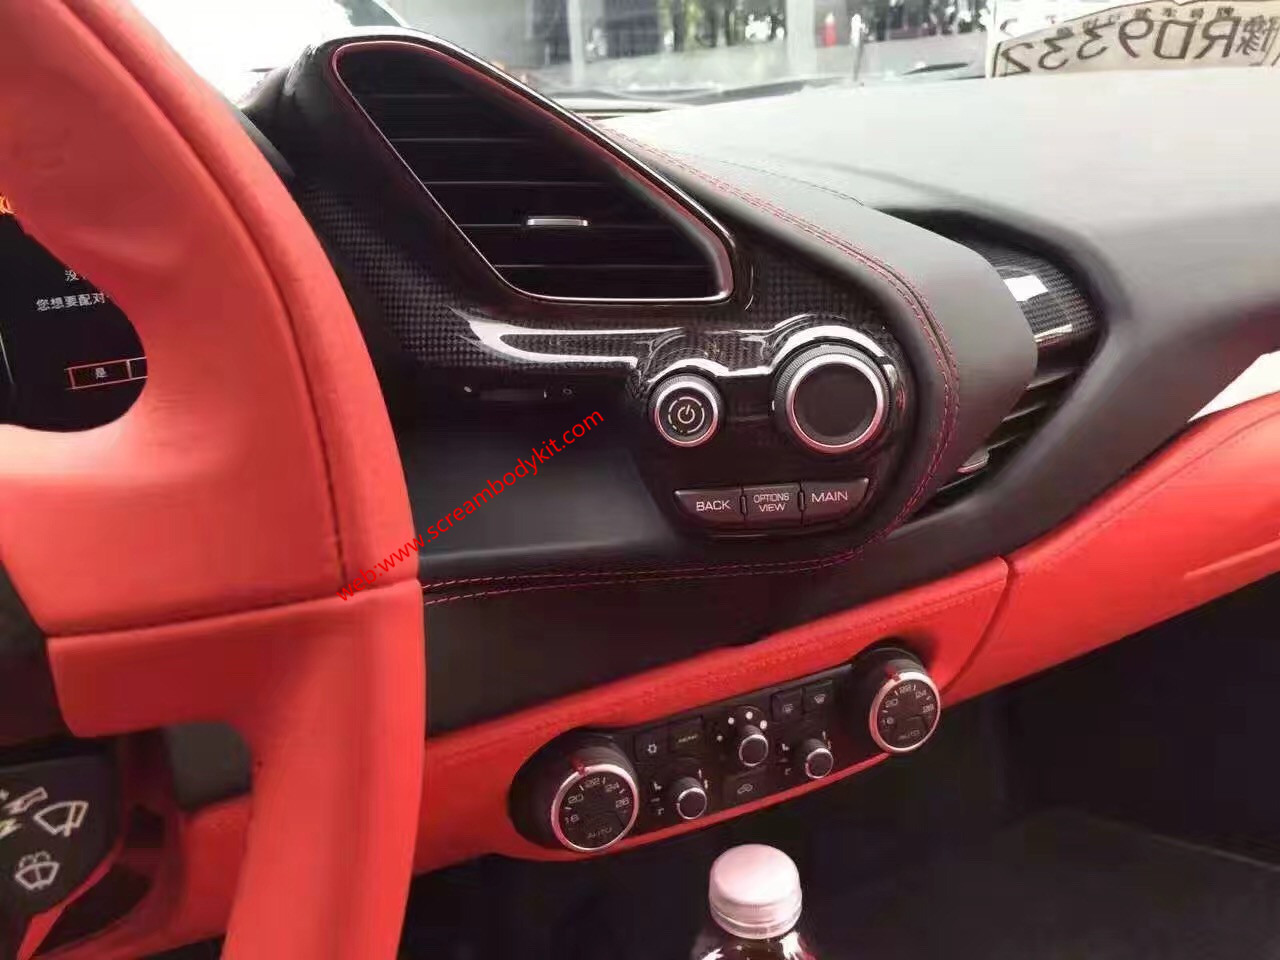 Ferrari F488 update carbon fiber interior trim and other carbon fiber parts